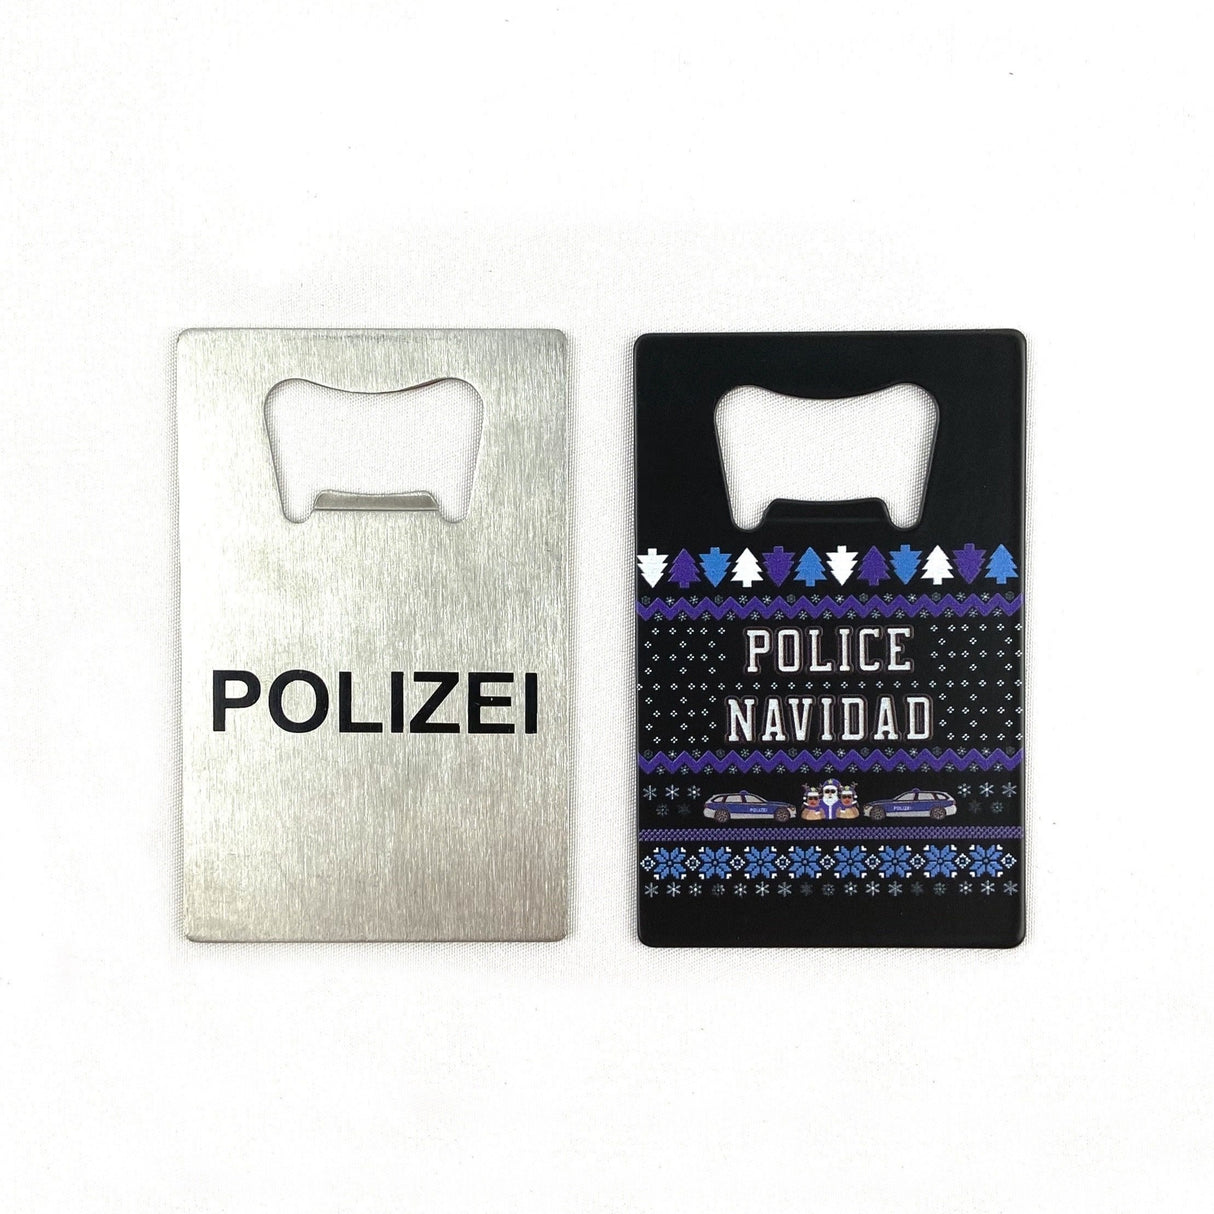 Police Navidad bottle opener